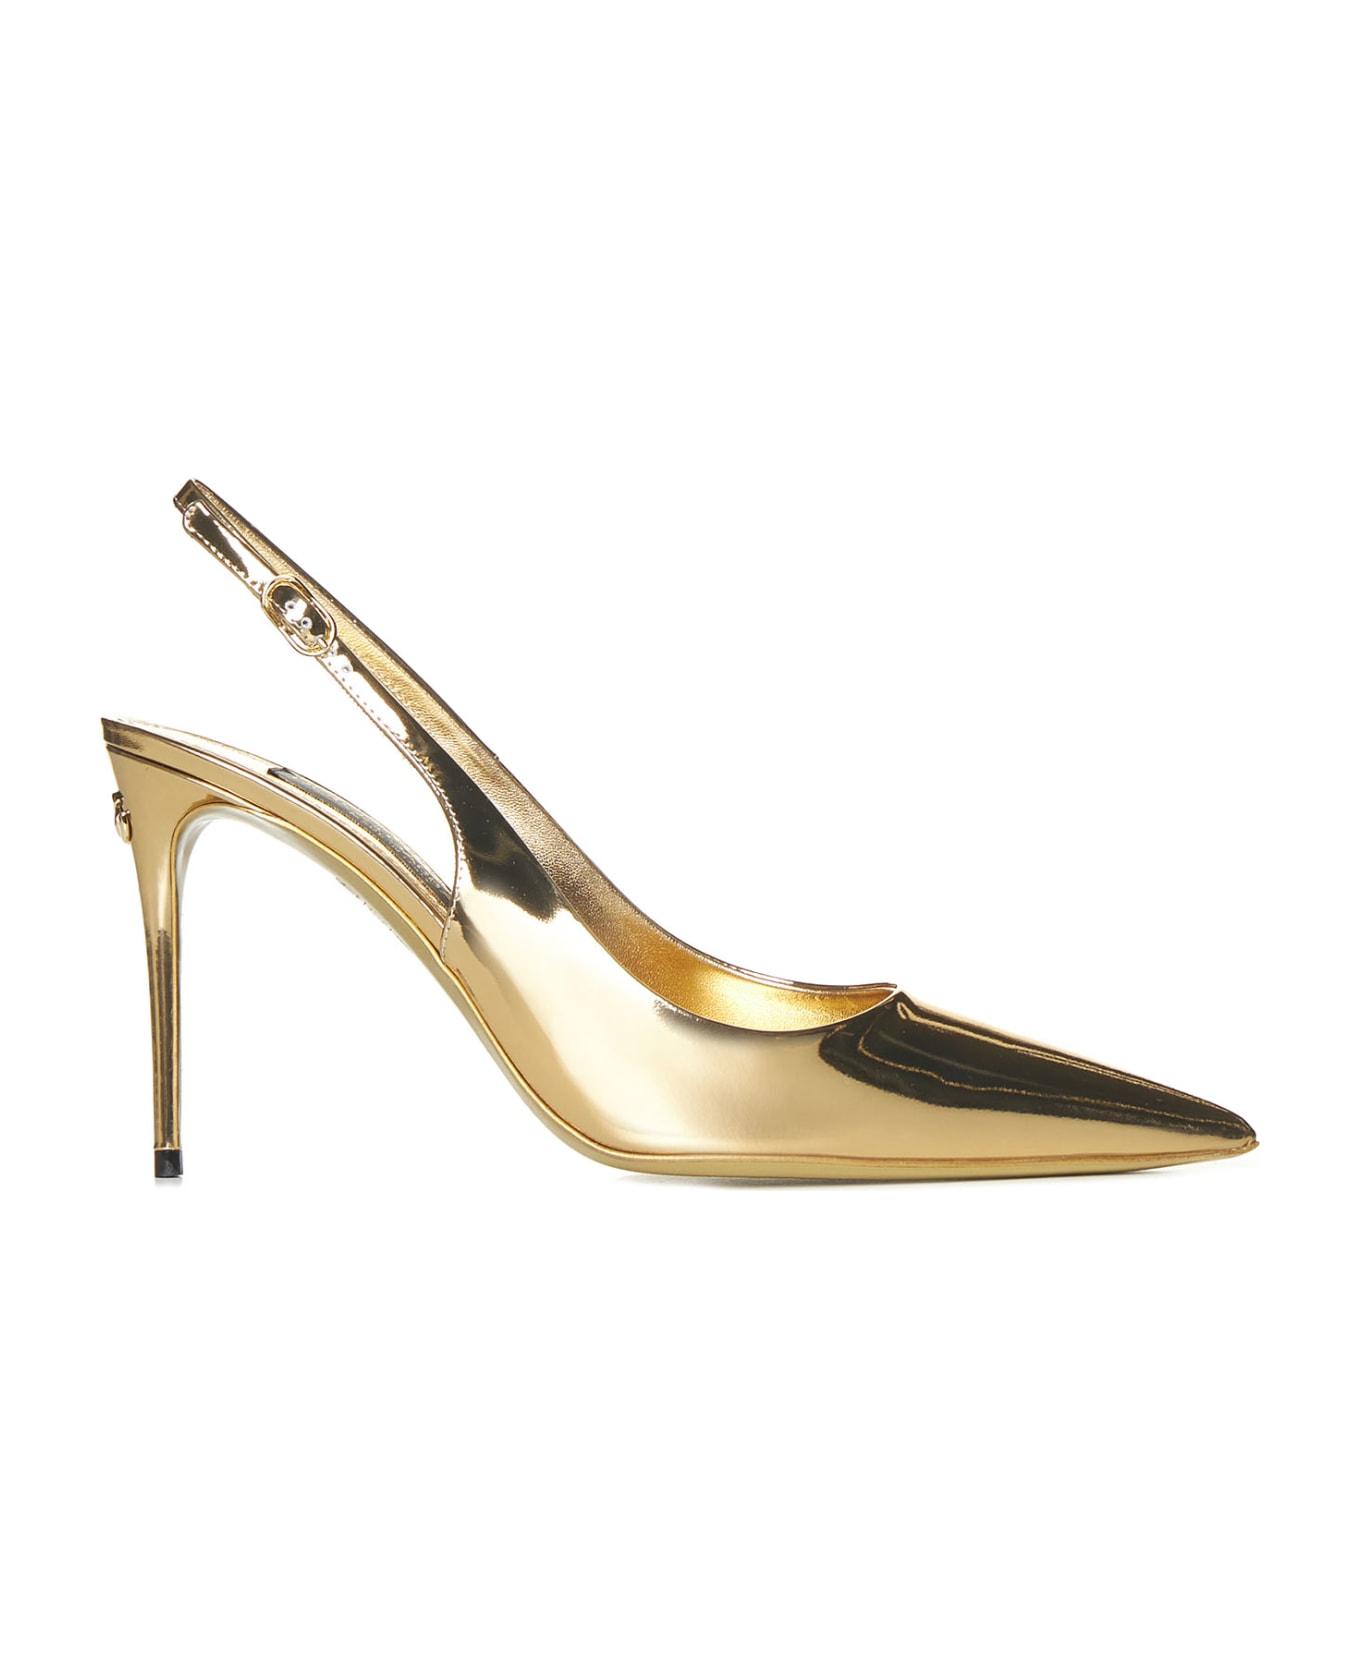 Dolce & Gabbana Leather Sling Back Shoe - Light gold